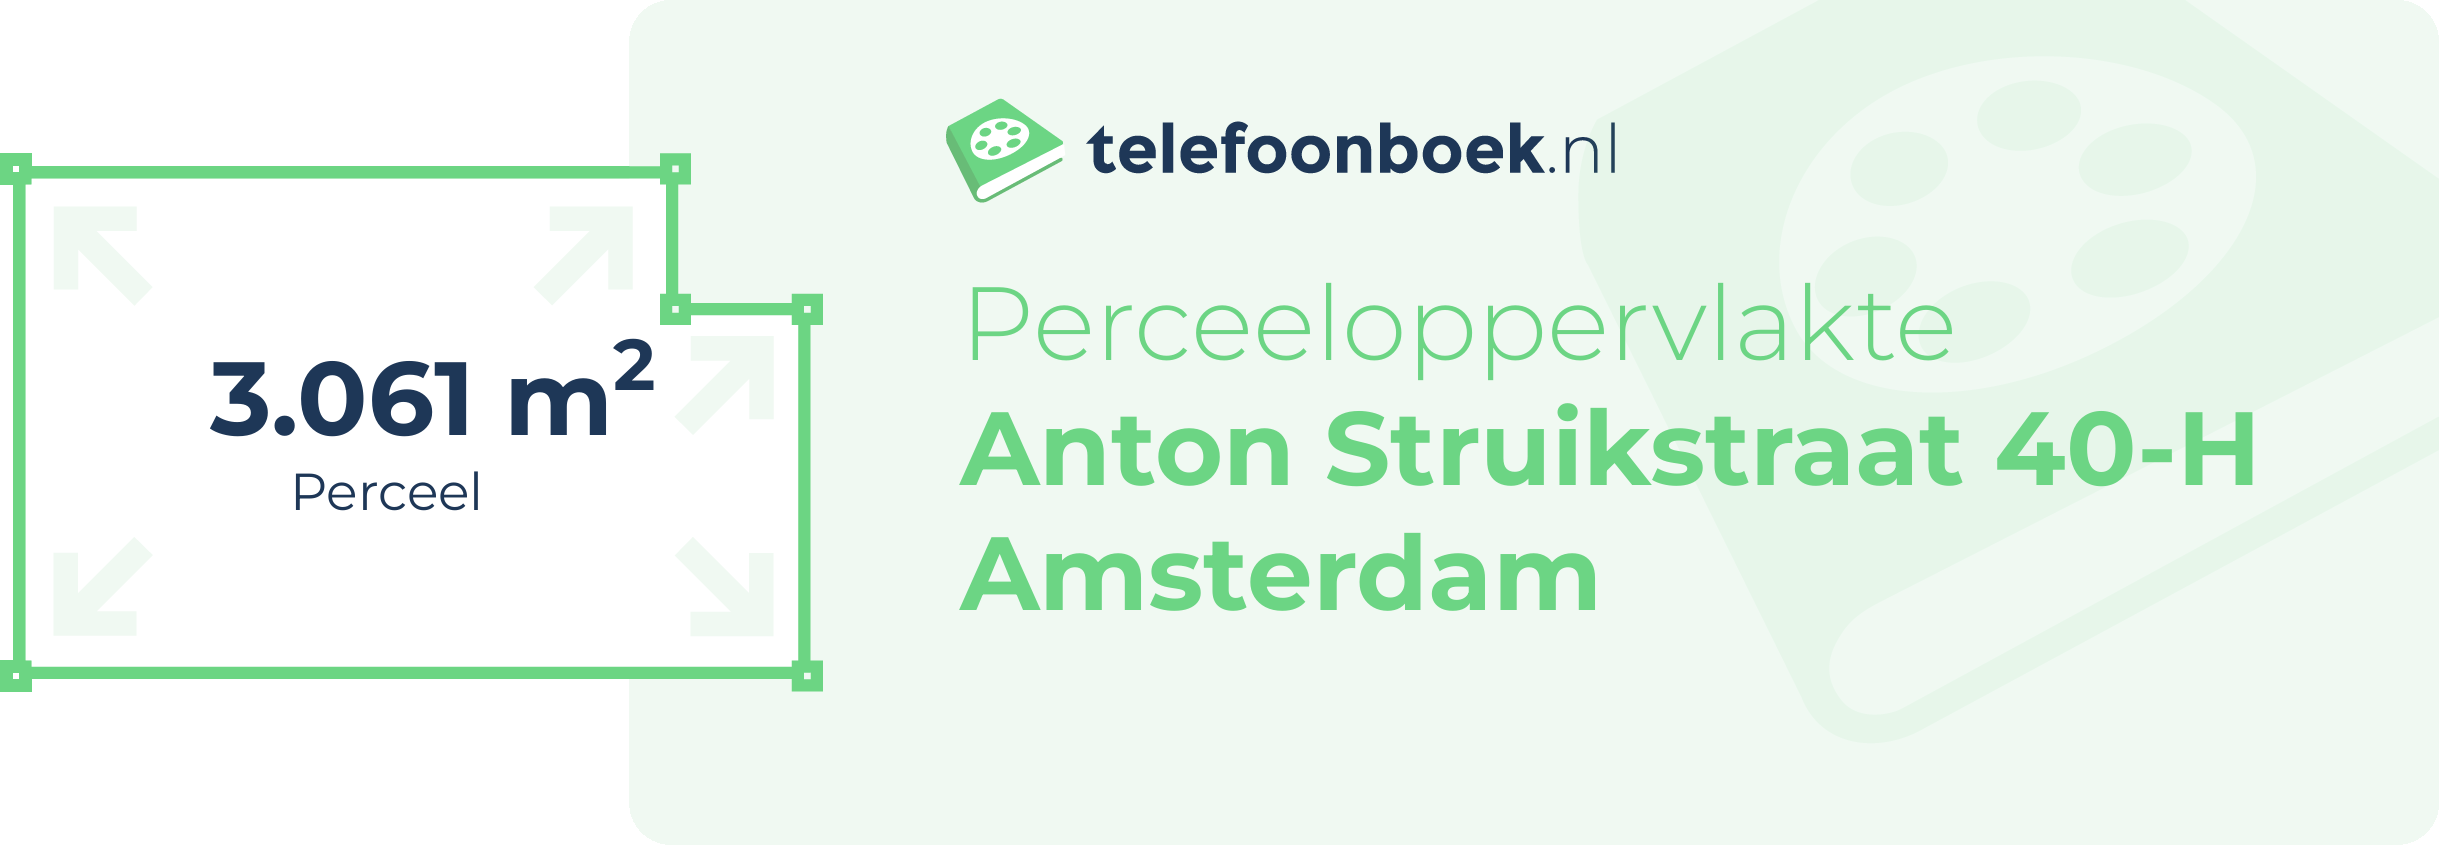 Perceeloppervlakte Anton Struikstraat 40-H Amsterdam